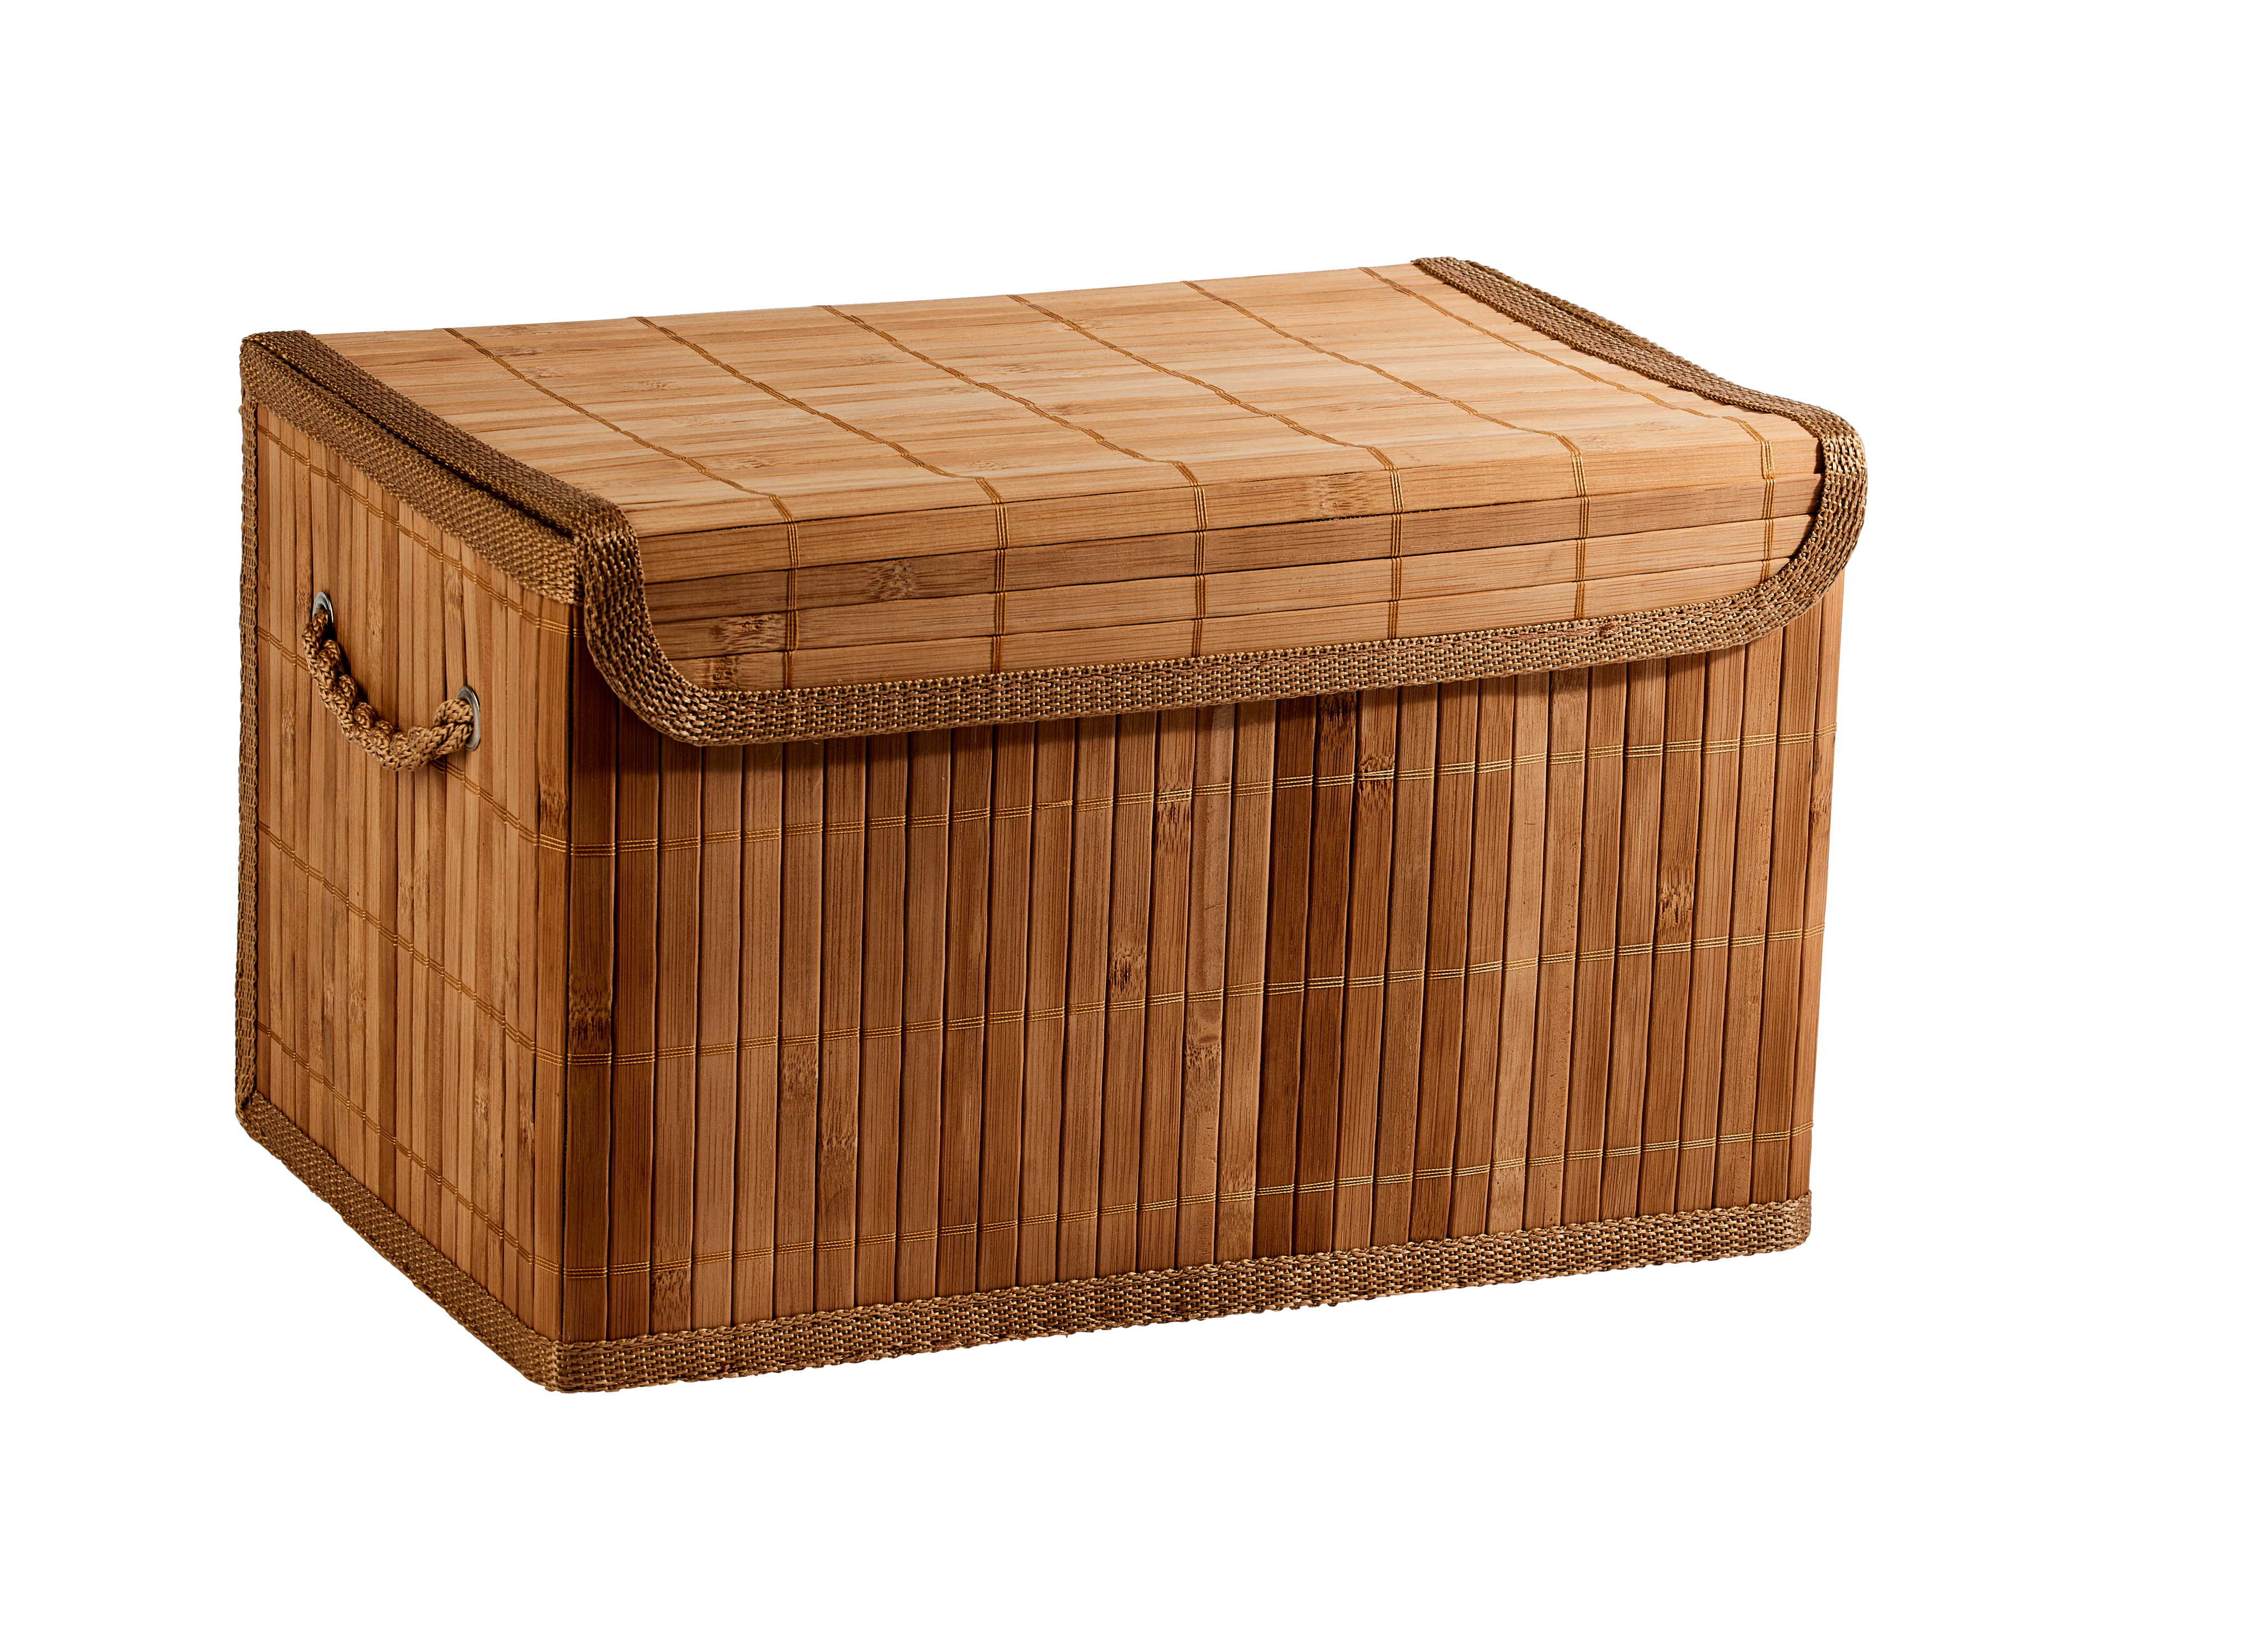 Uymaty 2 cestas de estudio con asa,caja de almacenamiento de cosméticos,organizador ordenado,cesta de almacenamiento rectangular para oficina en casa gris,30x19,5x12cm,24,5x17,5x10,2cm 